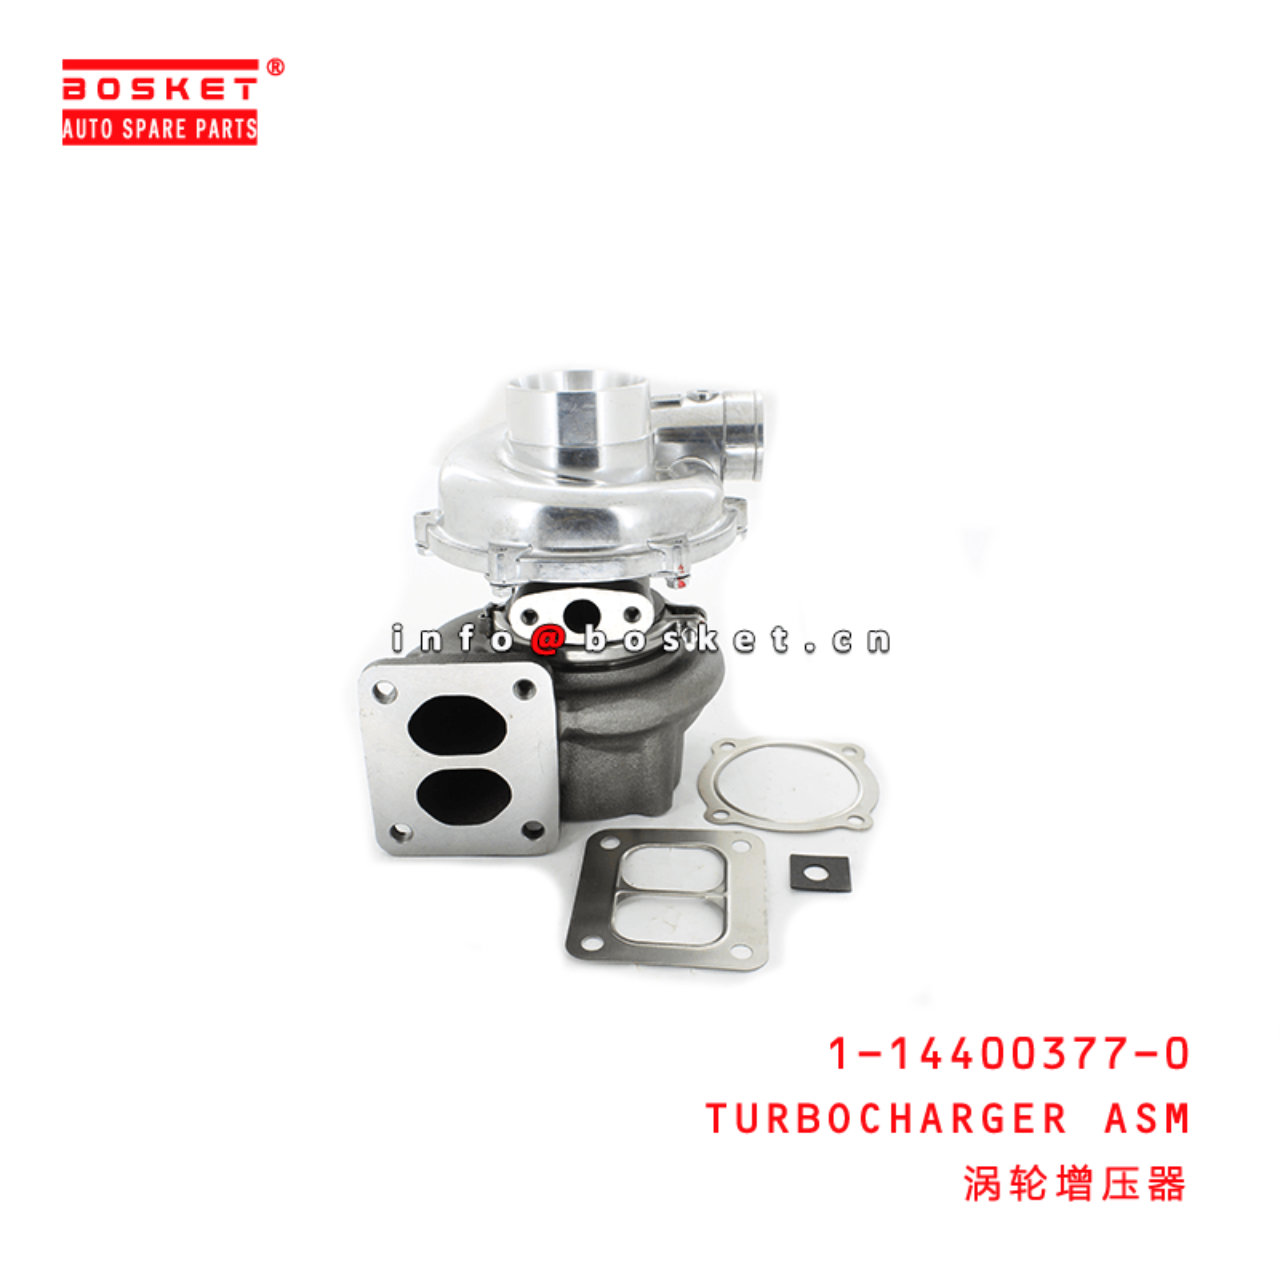 1-14400377-0 Turbocharger Assembly Suitable for ISUZU XE 6BG1 1144003770